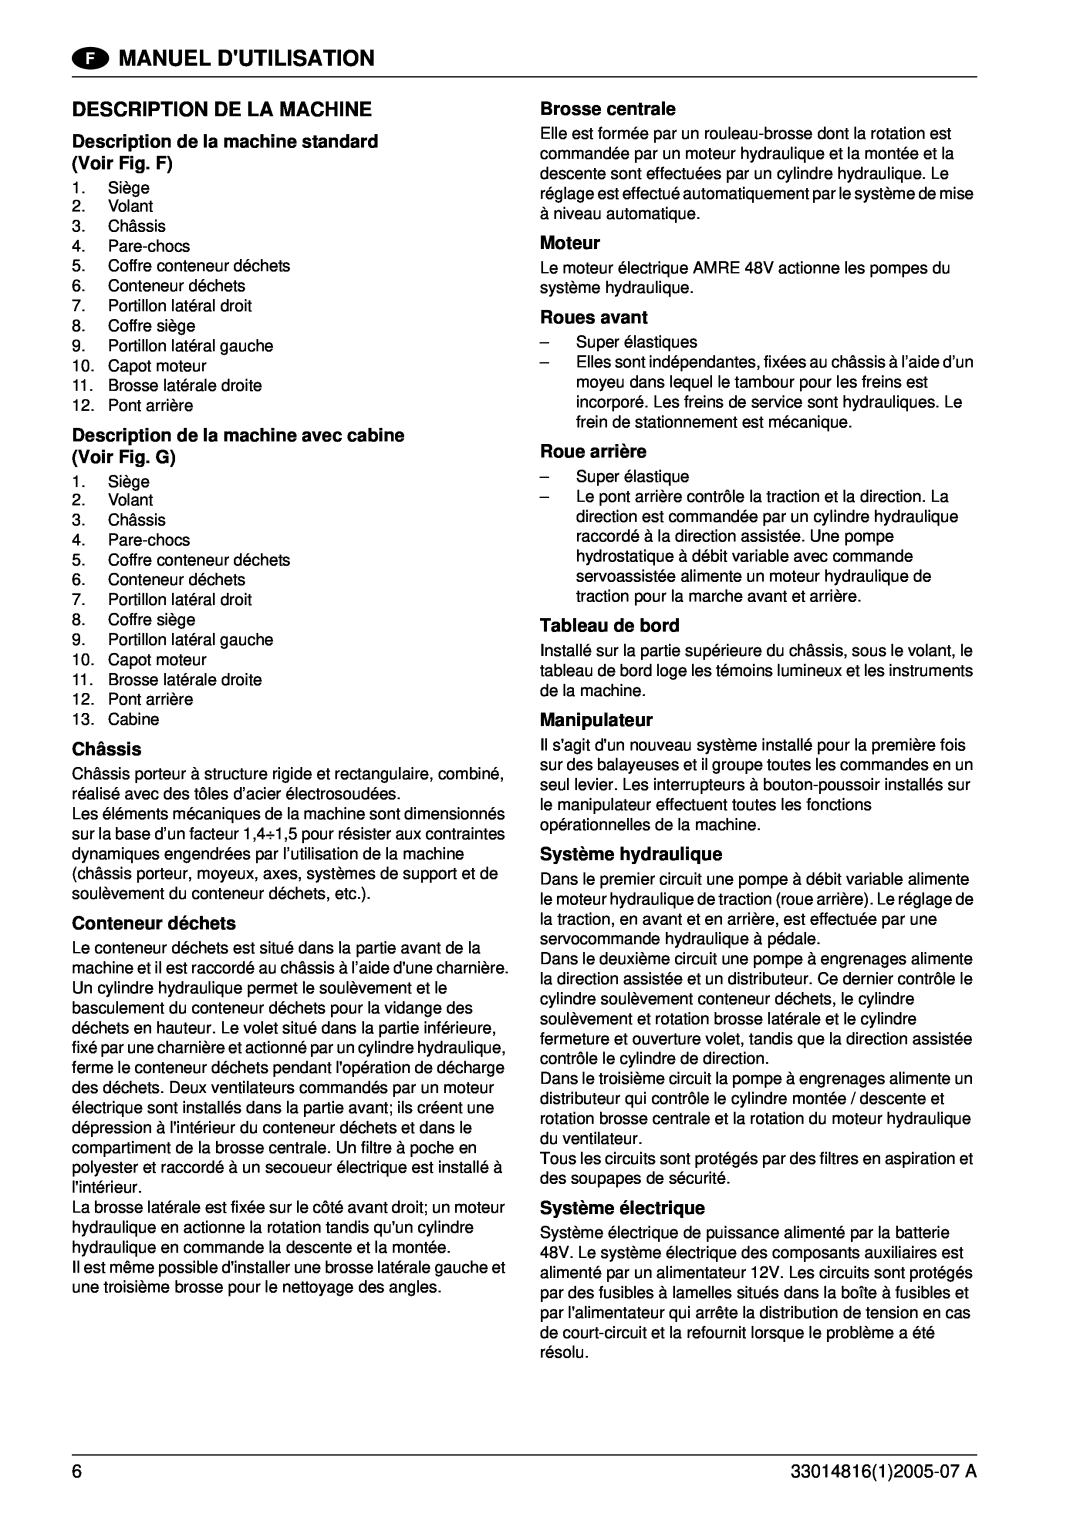 Nilfisk-ALTO SR 1700 2WD B manuel dutilisation Description De La Machine, Manuel Dutilisation 